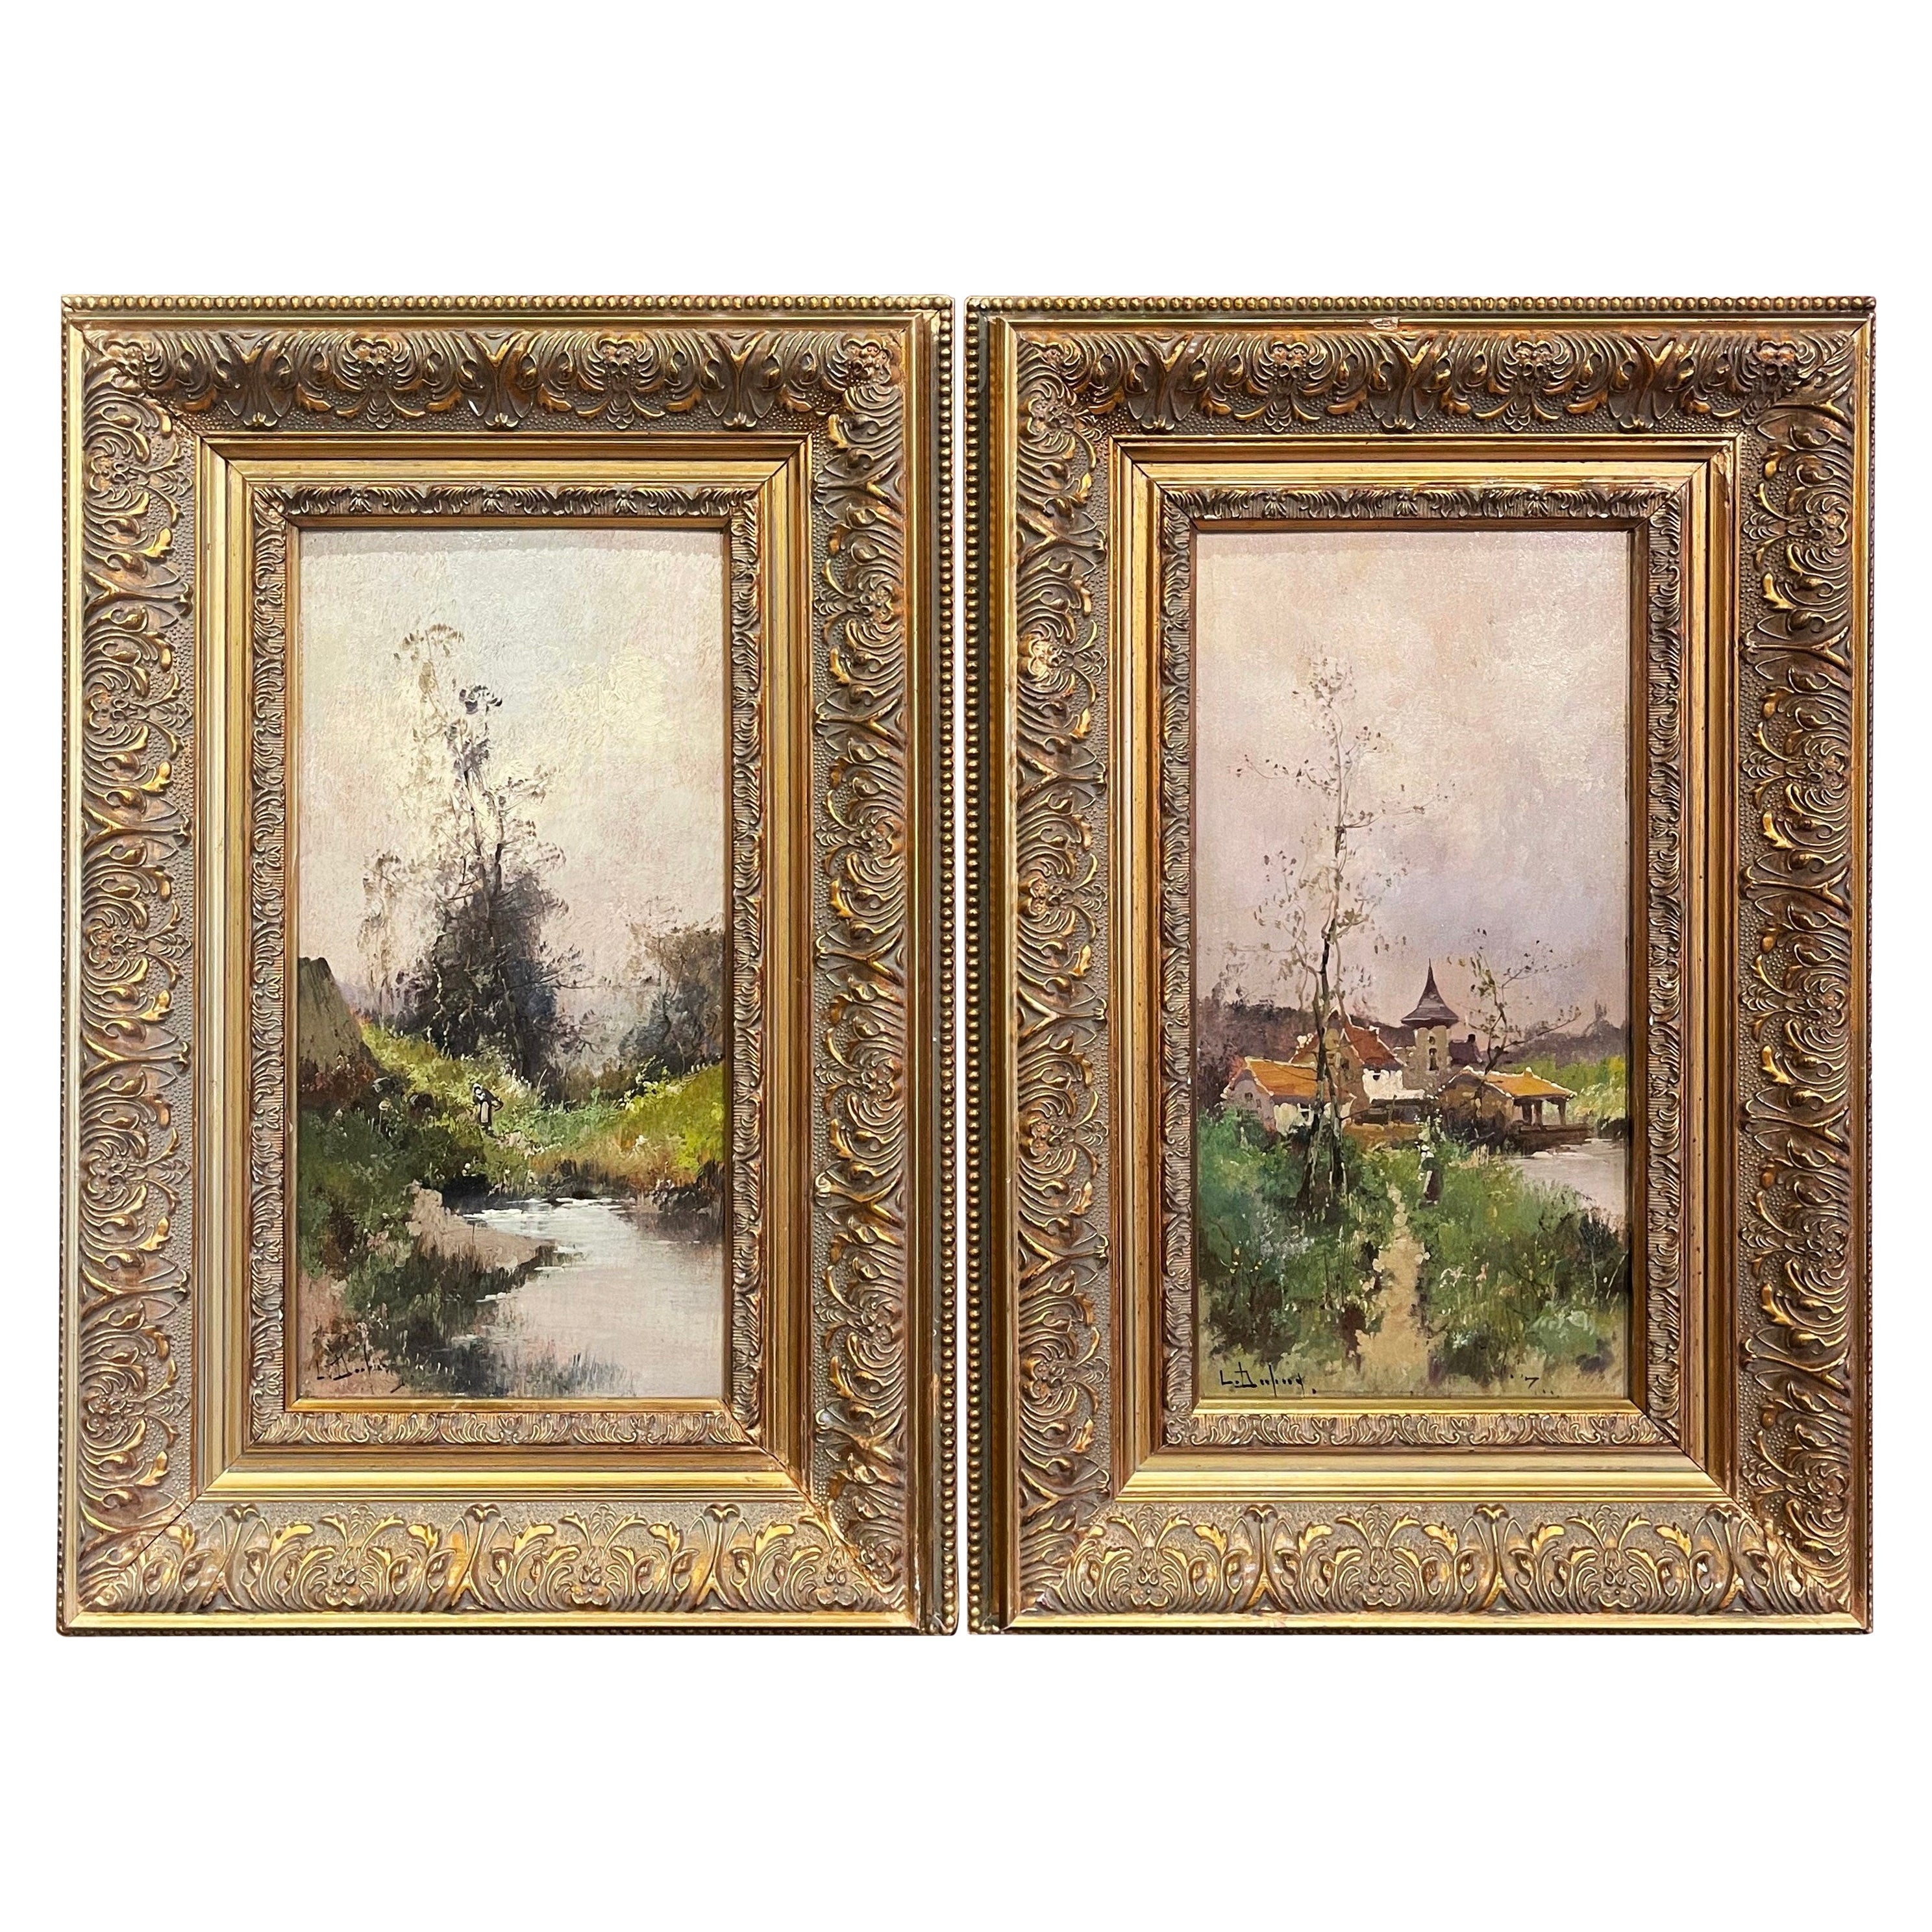 Pair of Framed Oil on Board Paintings Signed L. Dupuy for Eugene Galien-Laloue